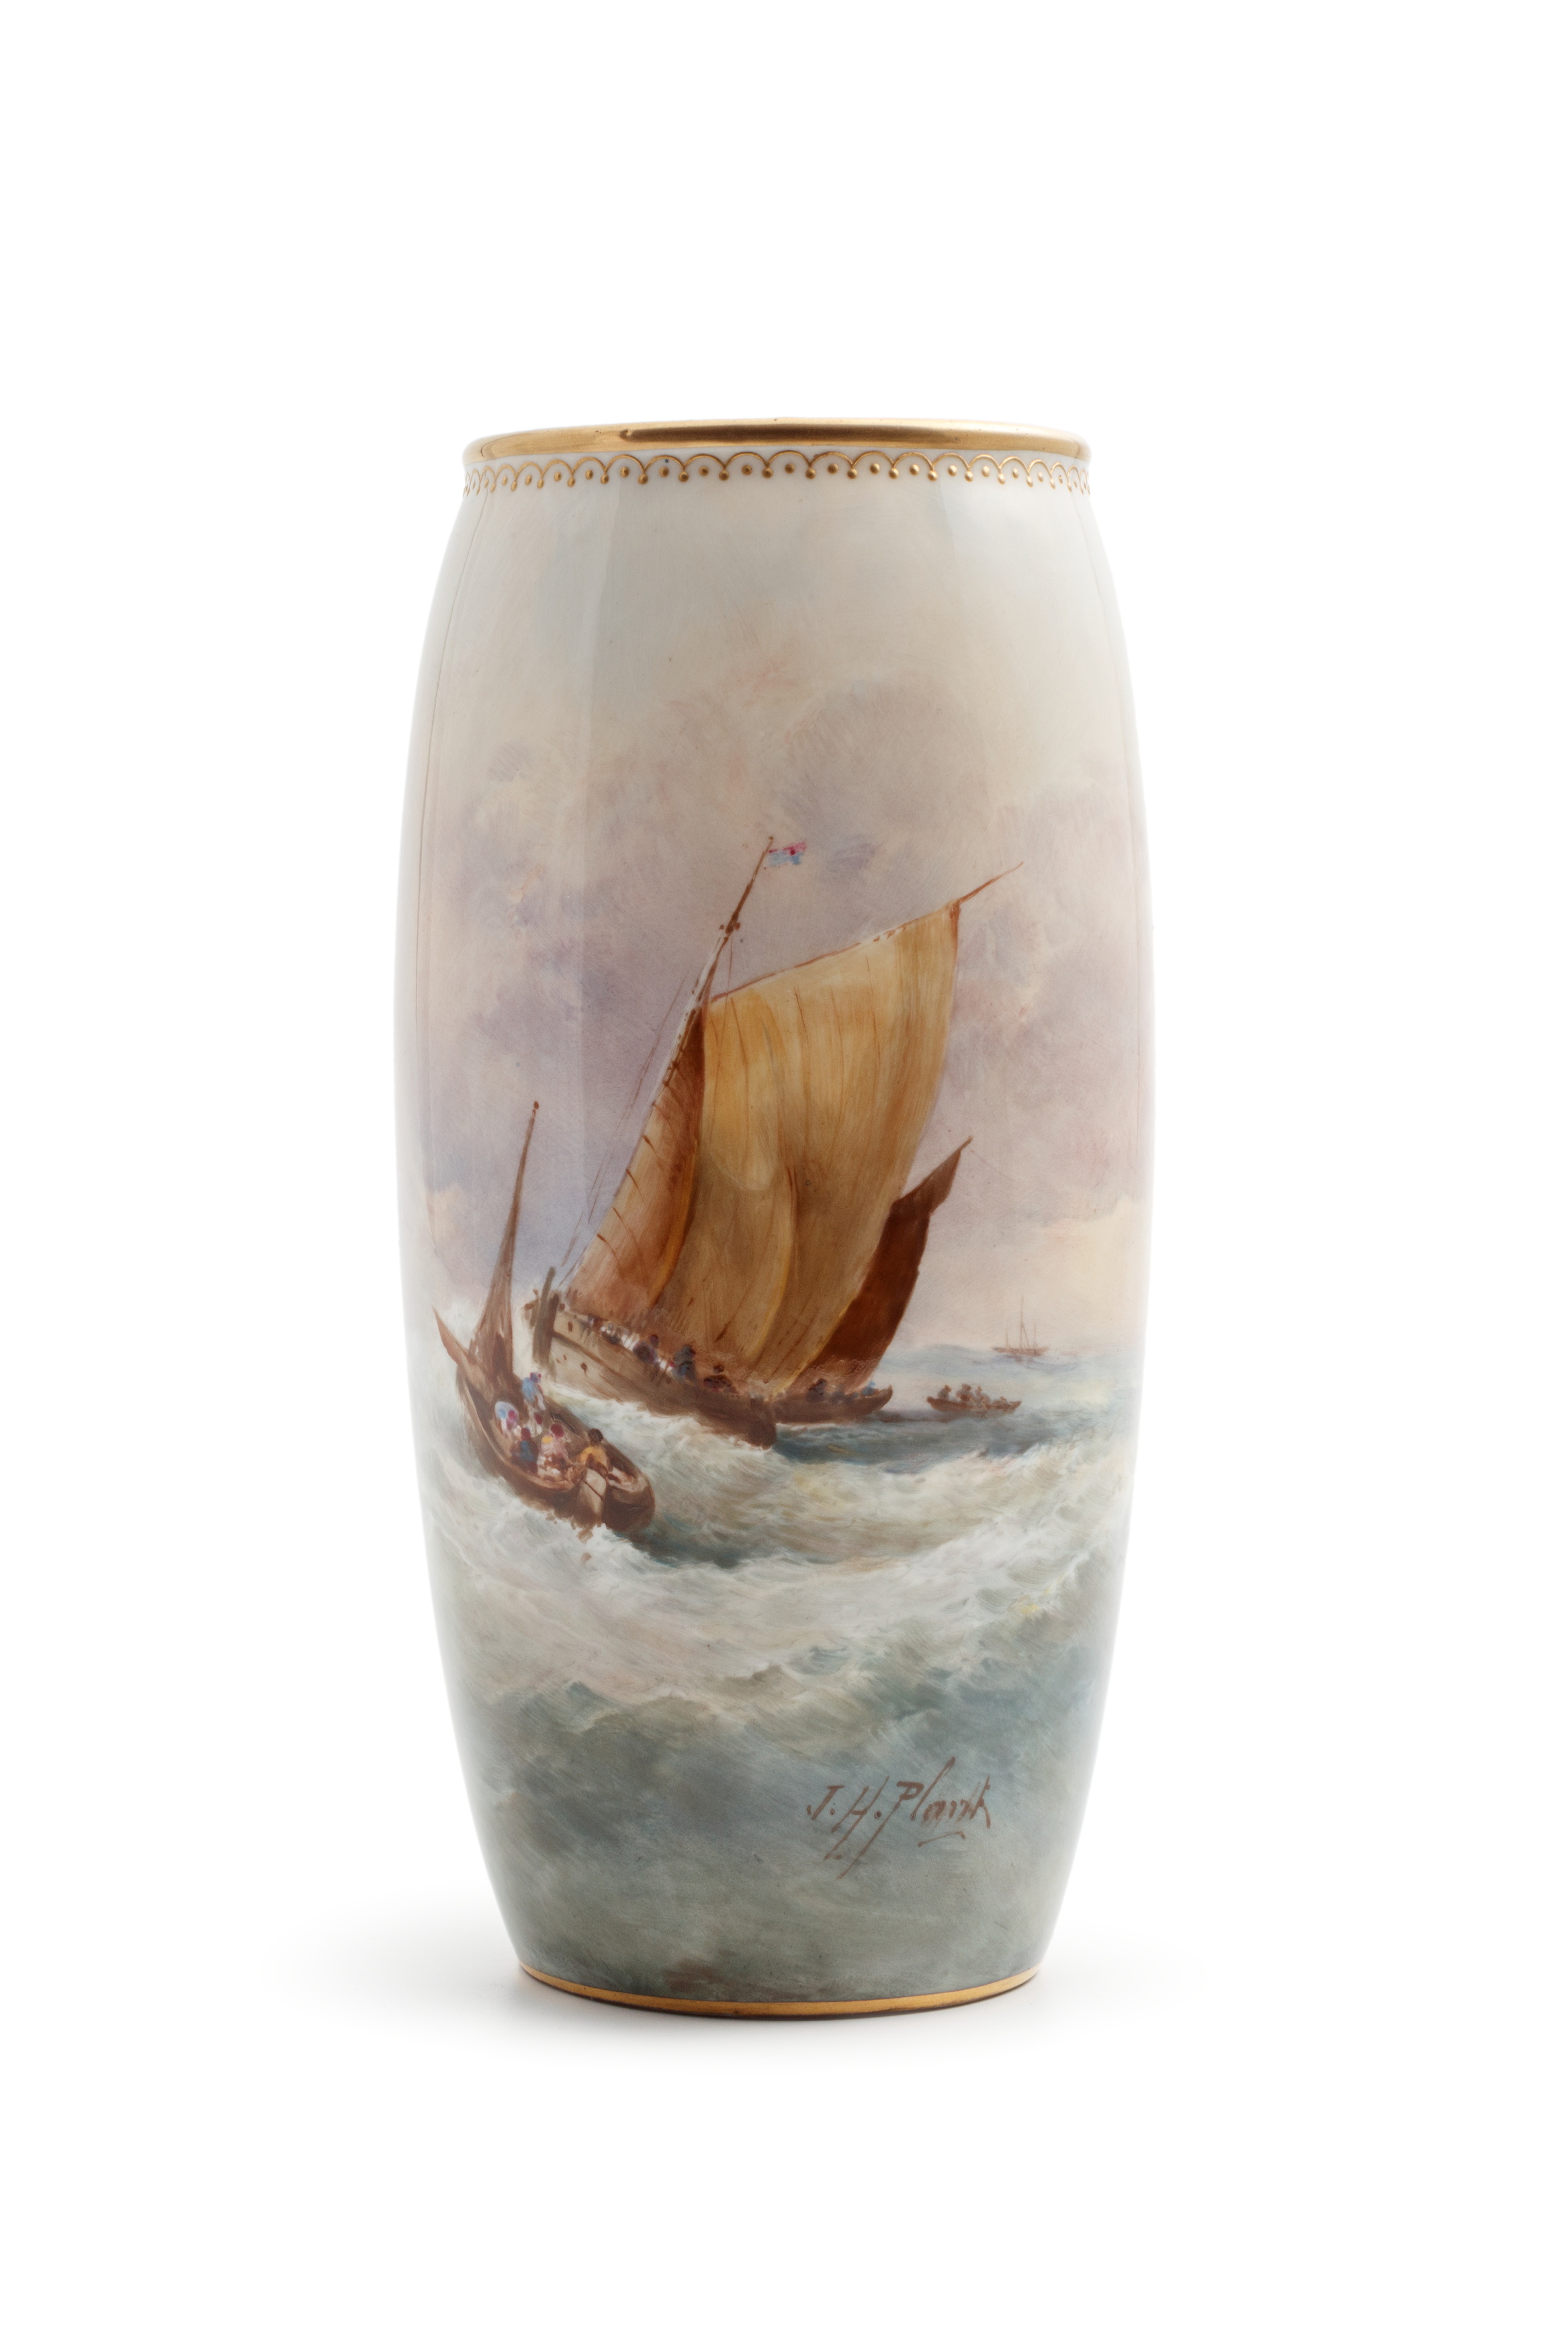 Royal Doulton vase, painted by John Hugh Plant